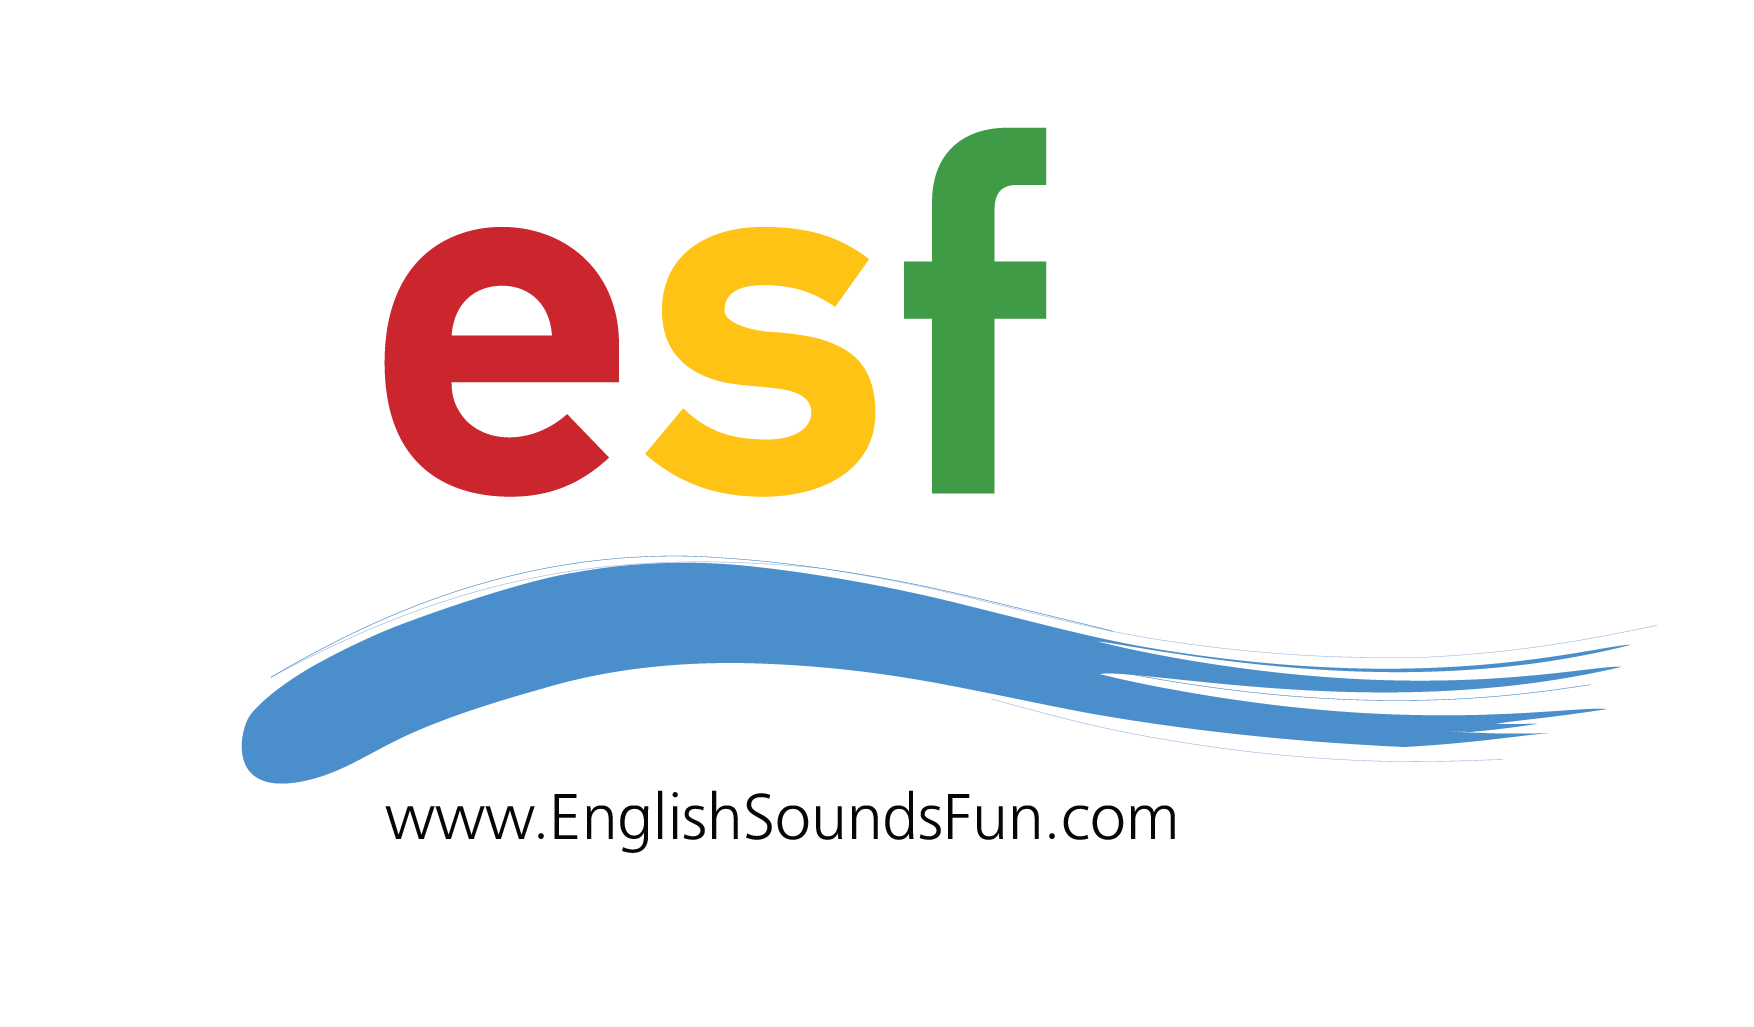 English Sounds Fun logo